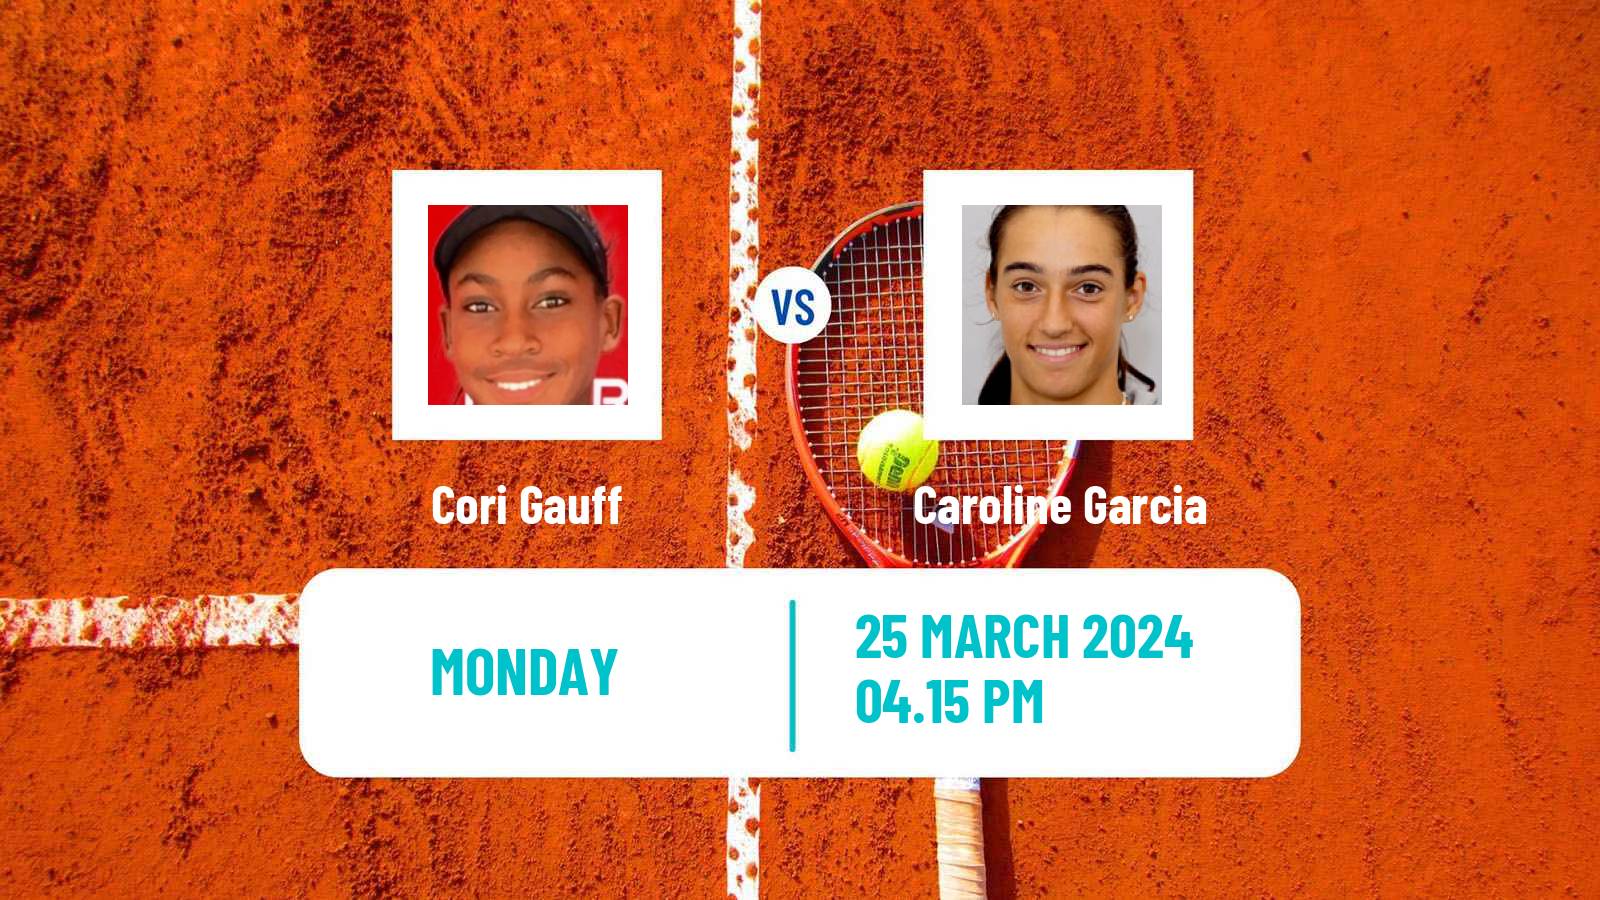 Tennis WTA Miami Cori Gauff - Caroline Garcia